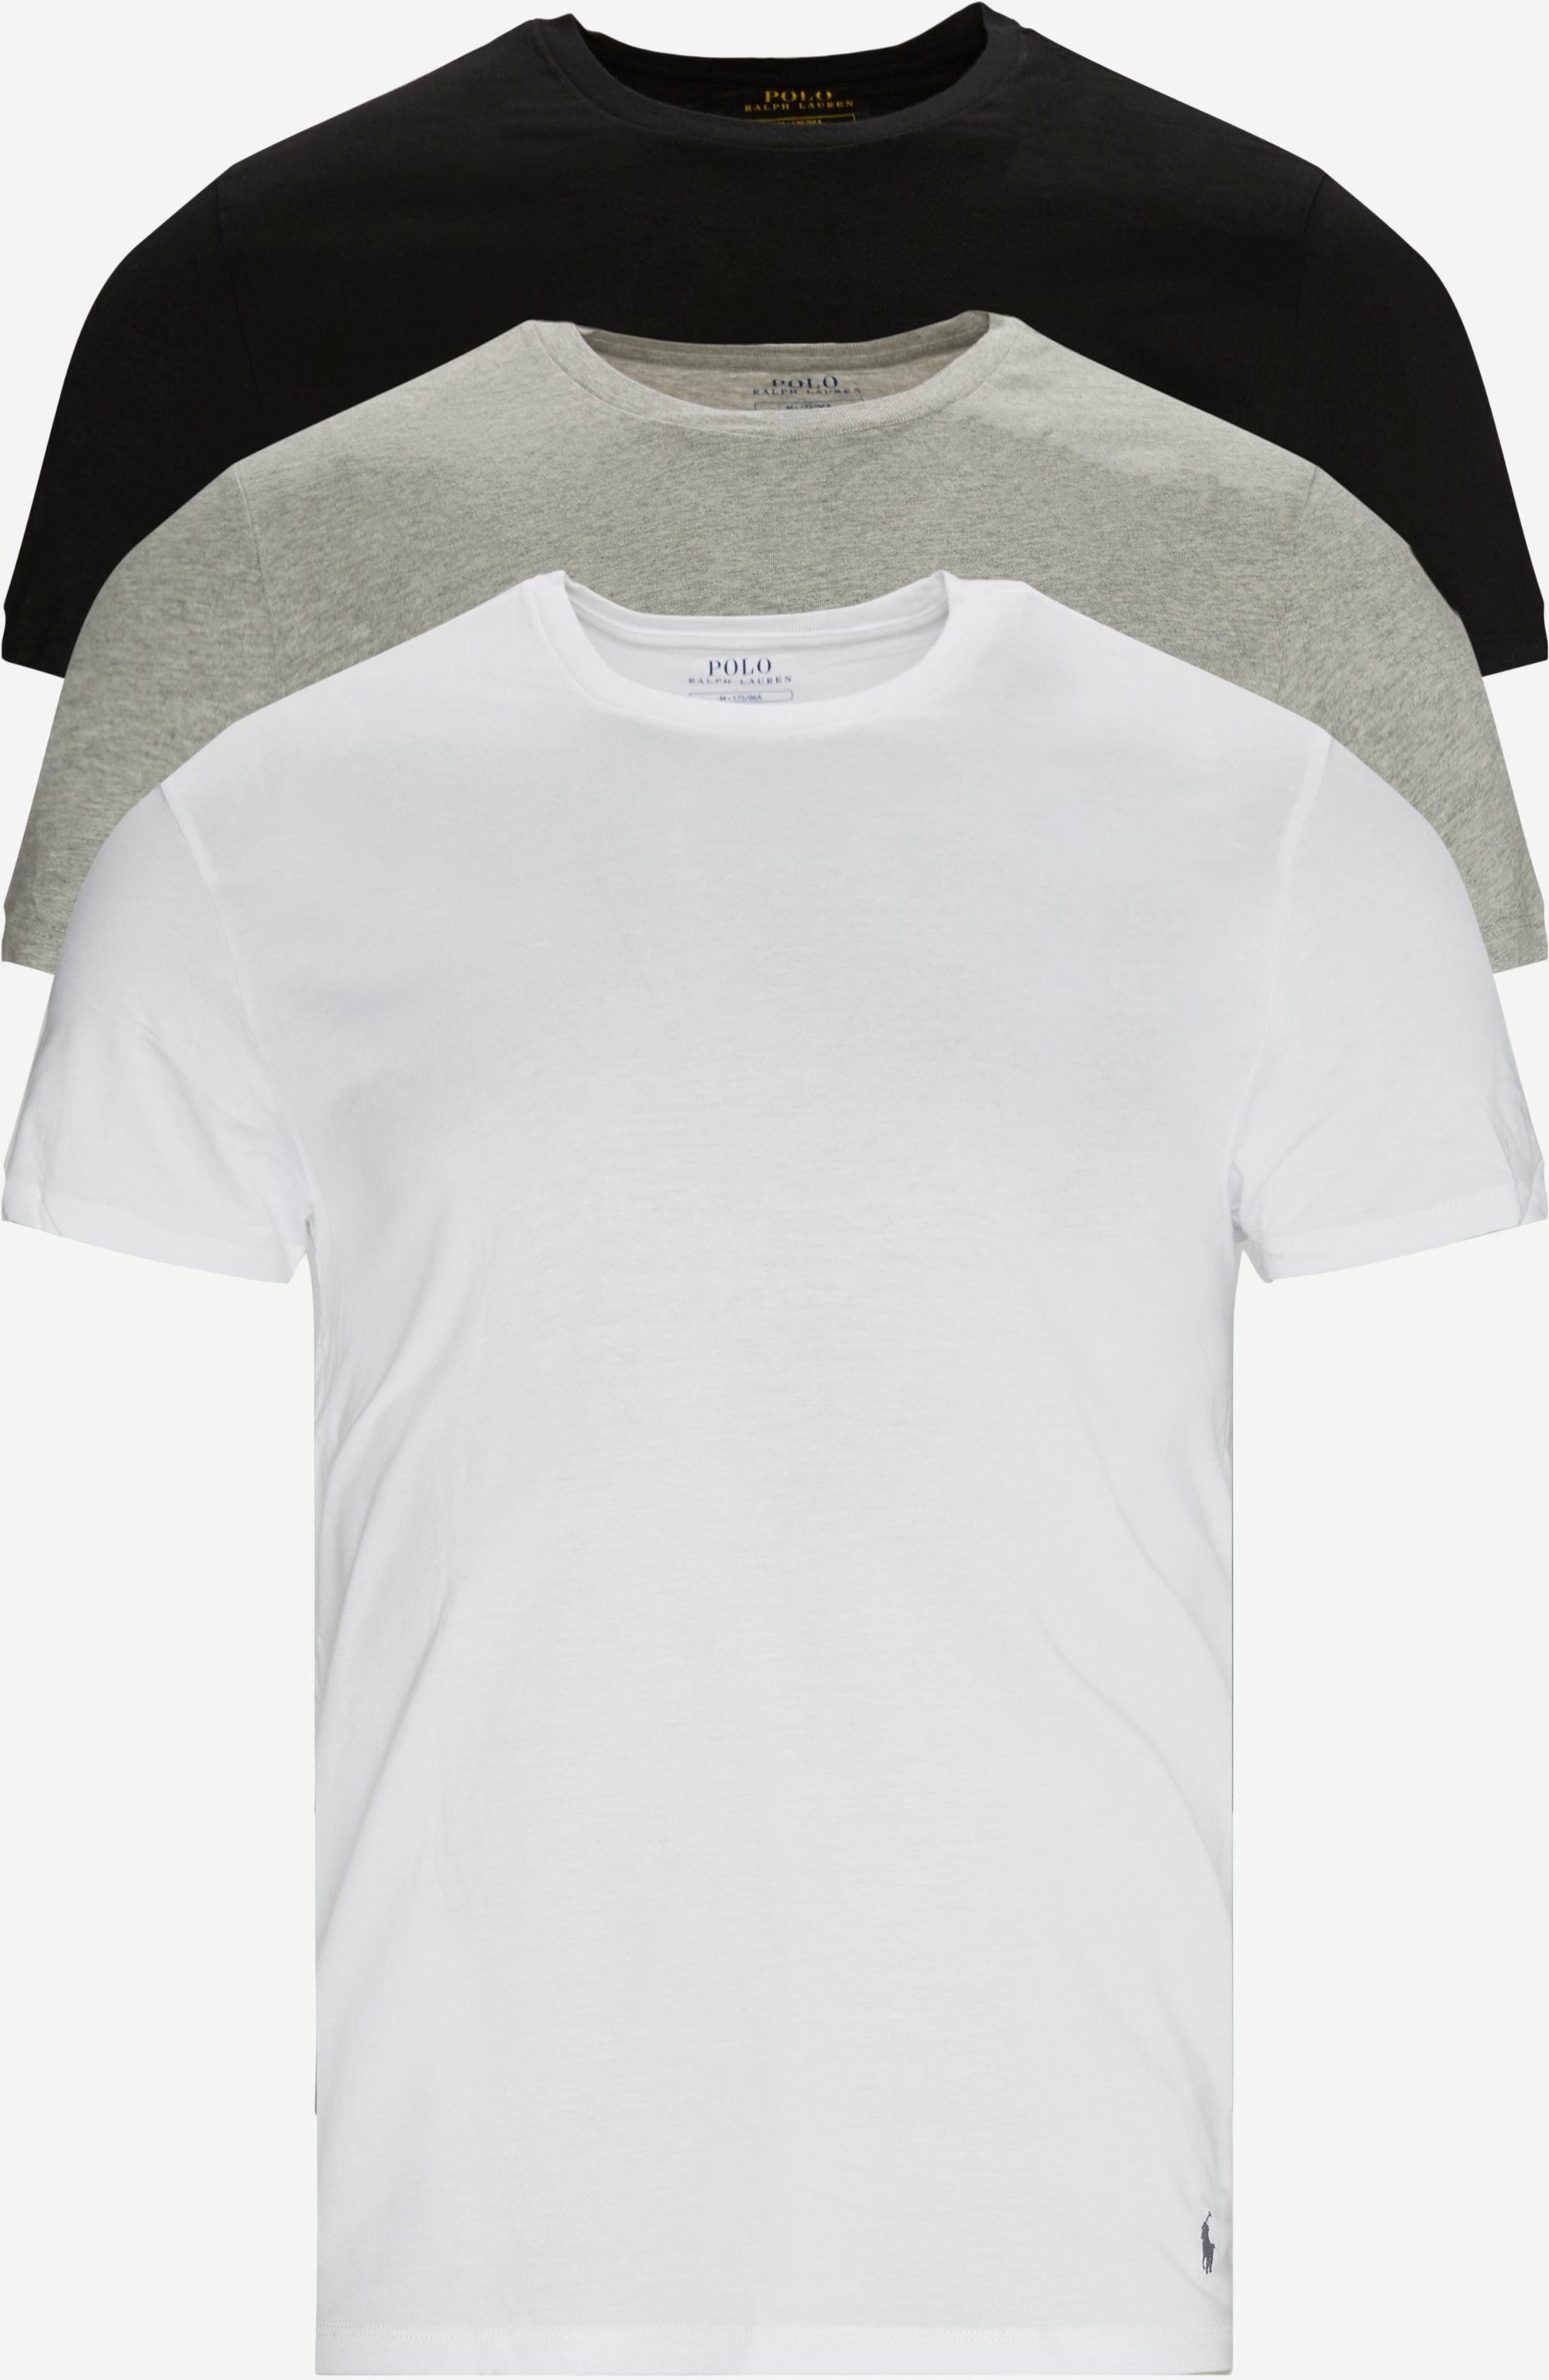 Polo Ralph Lauren T-shirts 714830304 Multi